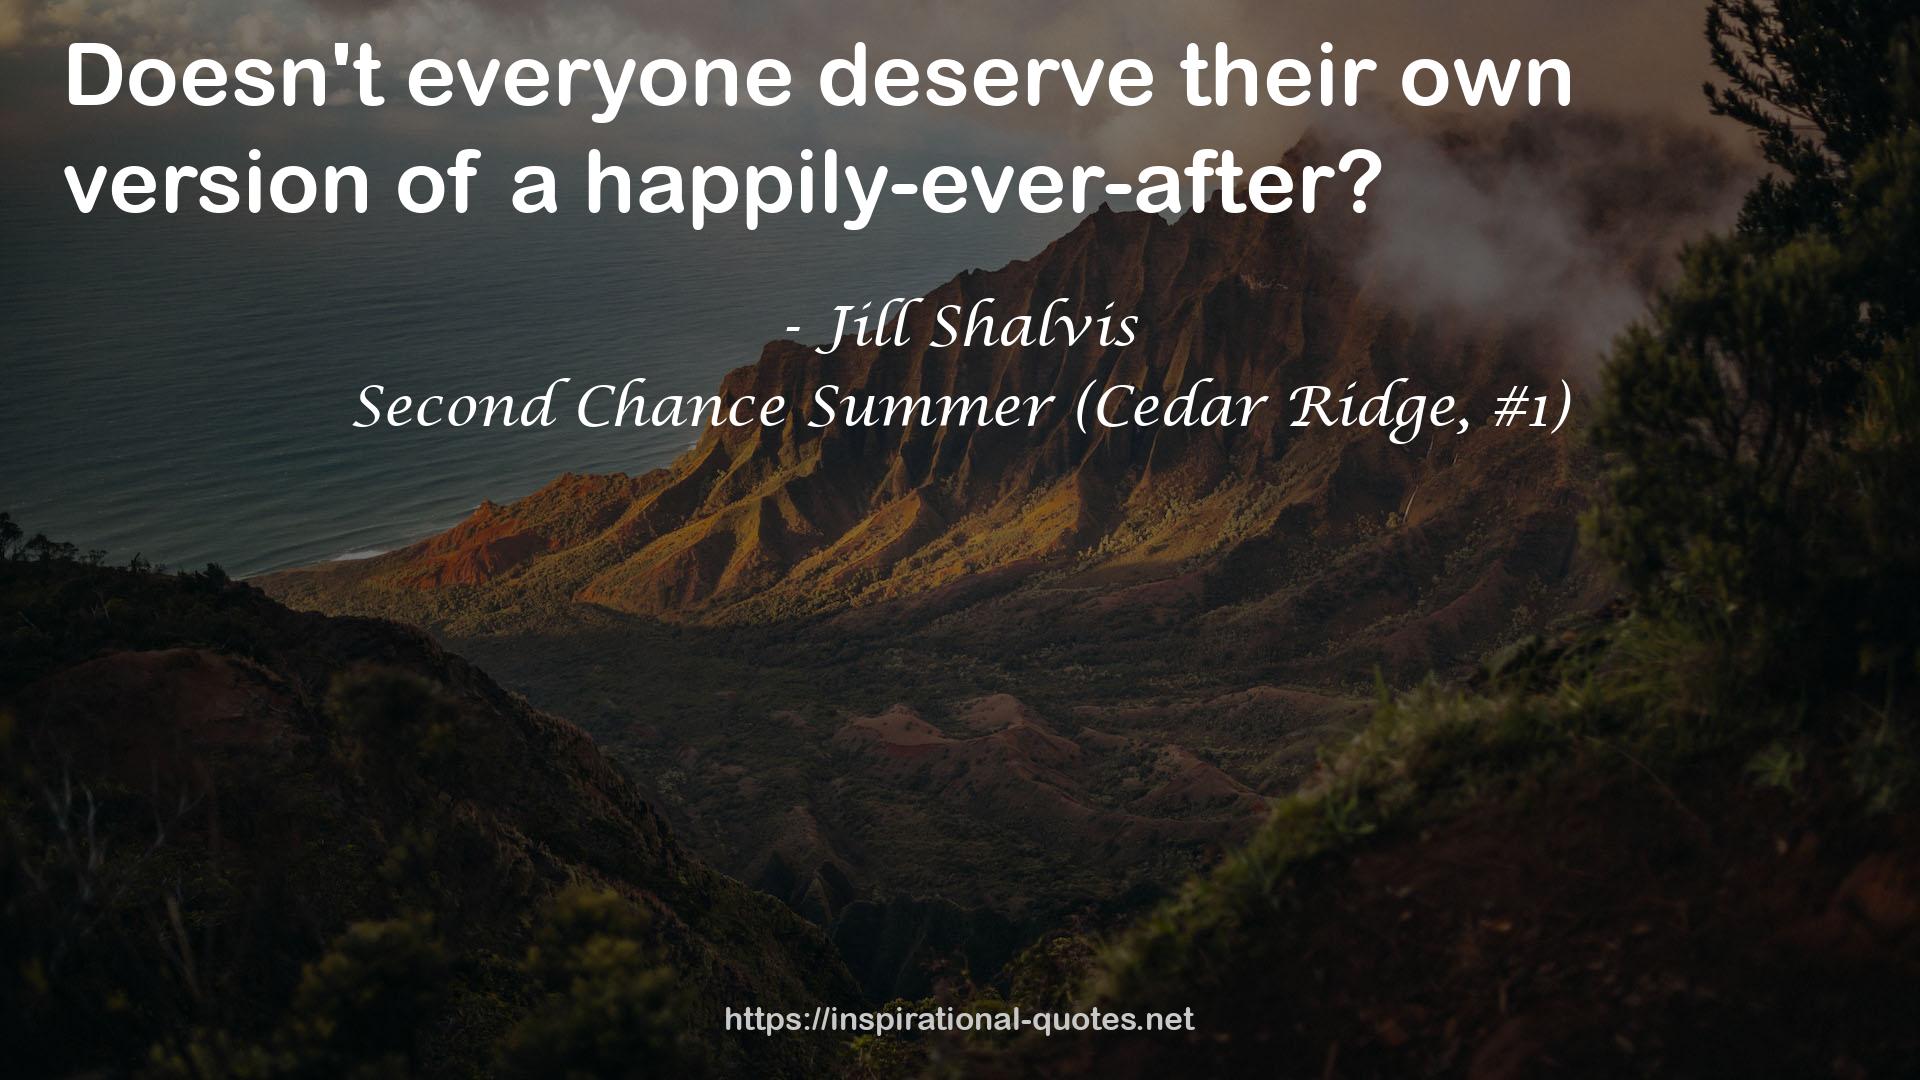 Second Chance Summer (Cedar Ridge, #1) QUOTES